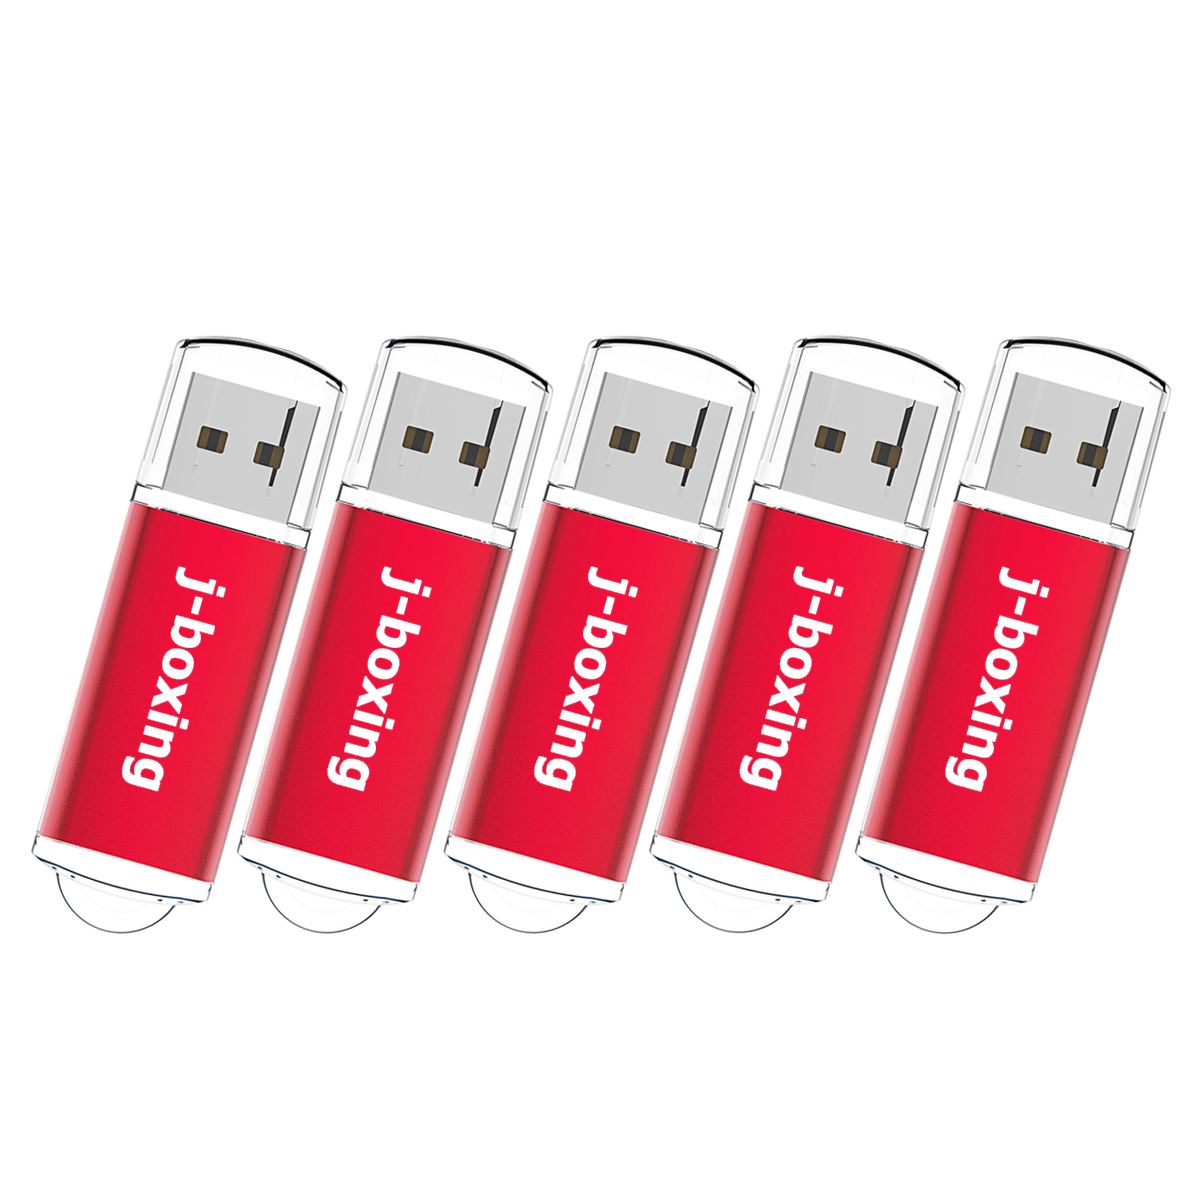 Kırmızı 5pcs/Lot Dikdörtgen USB 2.0 Flash Drive Flash Kalem Sürücüsü Yüksek Hızlı Bellek Çubuk Depolama 1G 2G 4G 8G 16G 32G 64G PC Dizüstü Bilgisayar Başparmak Kalem